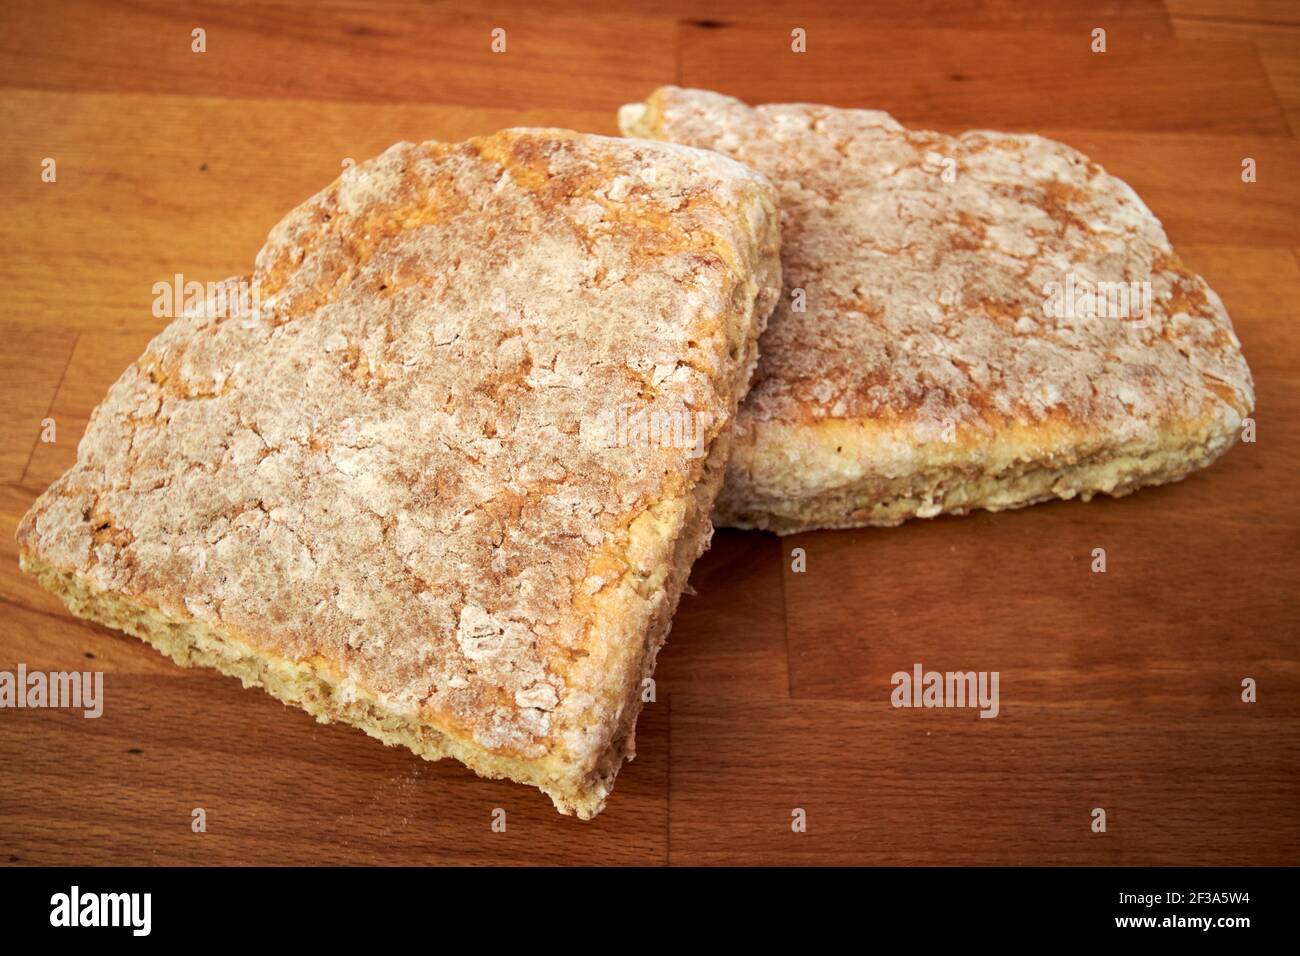 wheaten farls irish bread produced in home bakery by hand Stock Photo